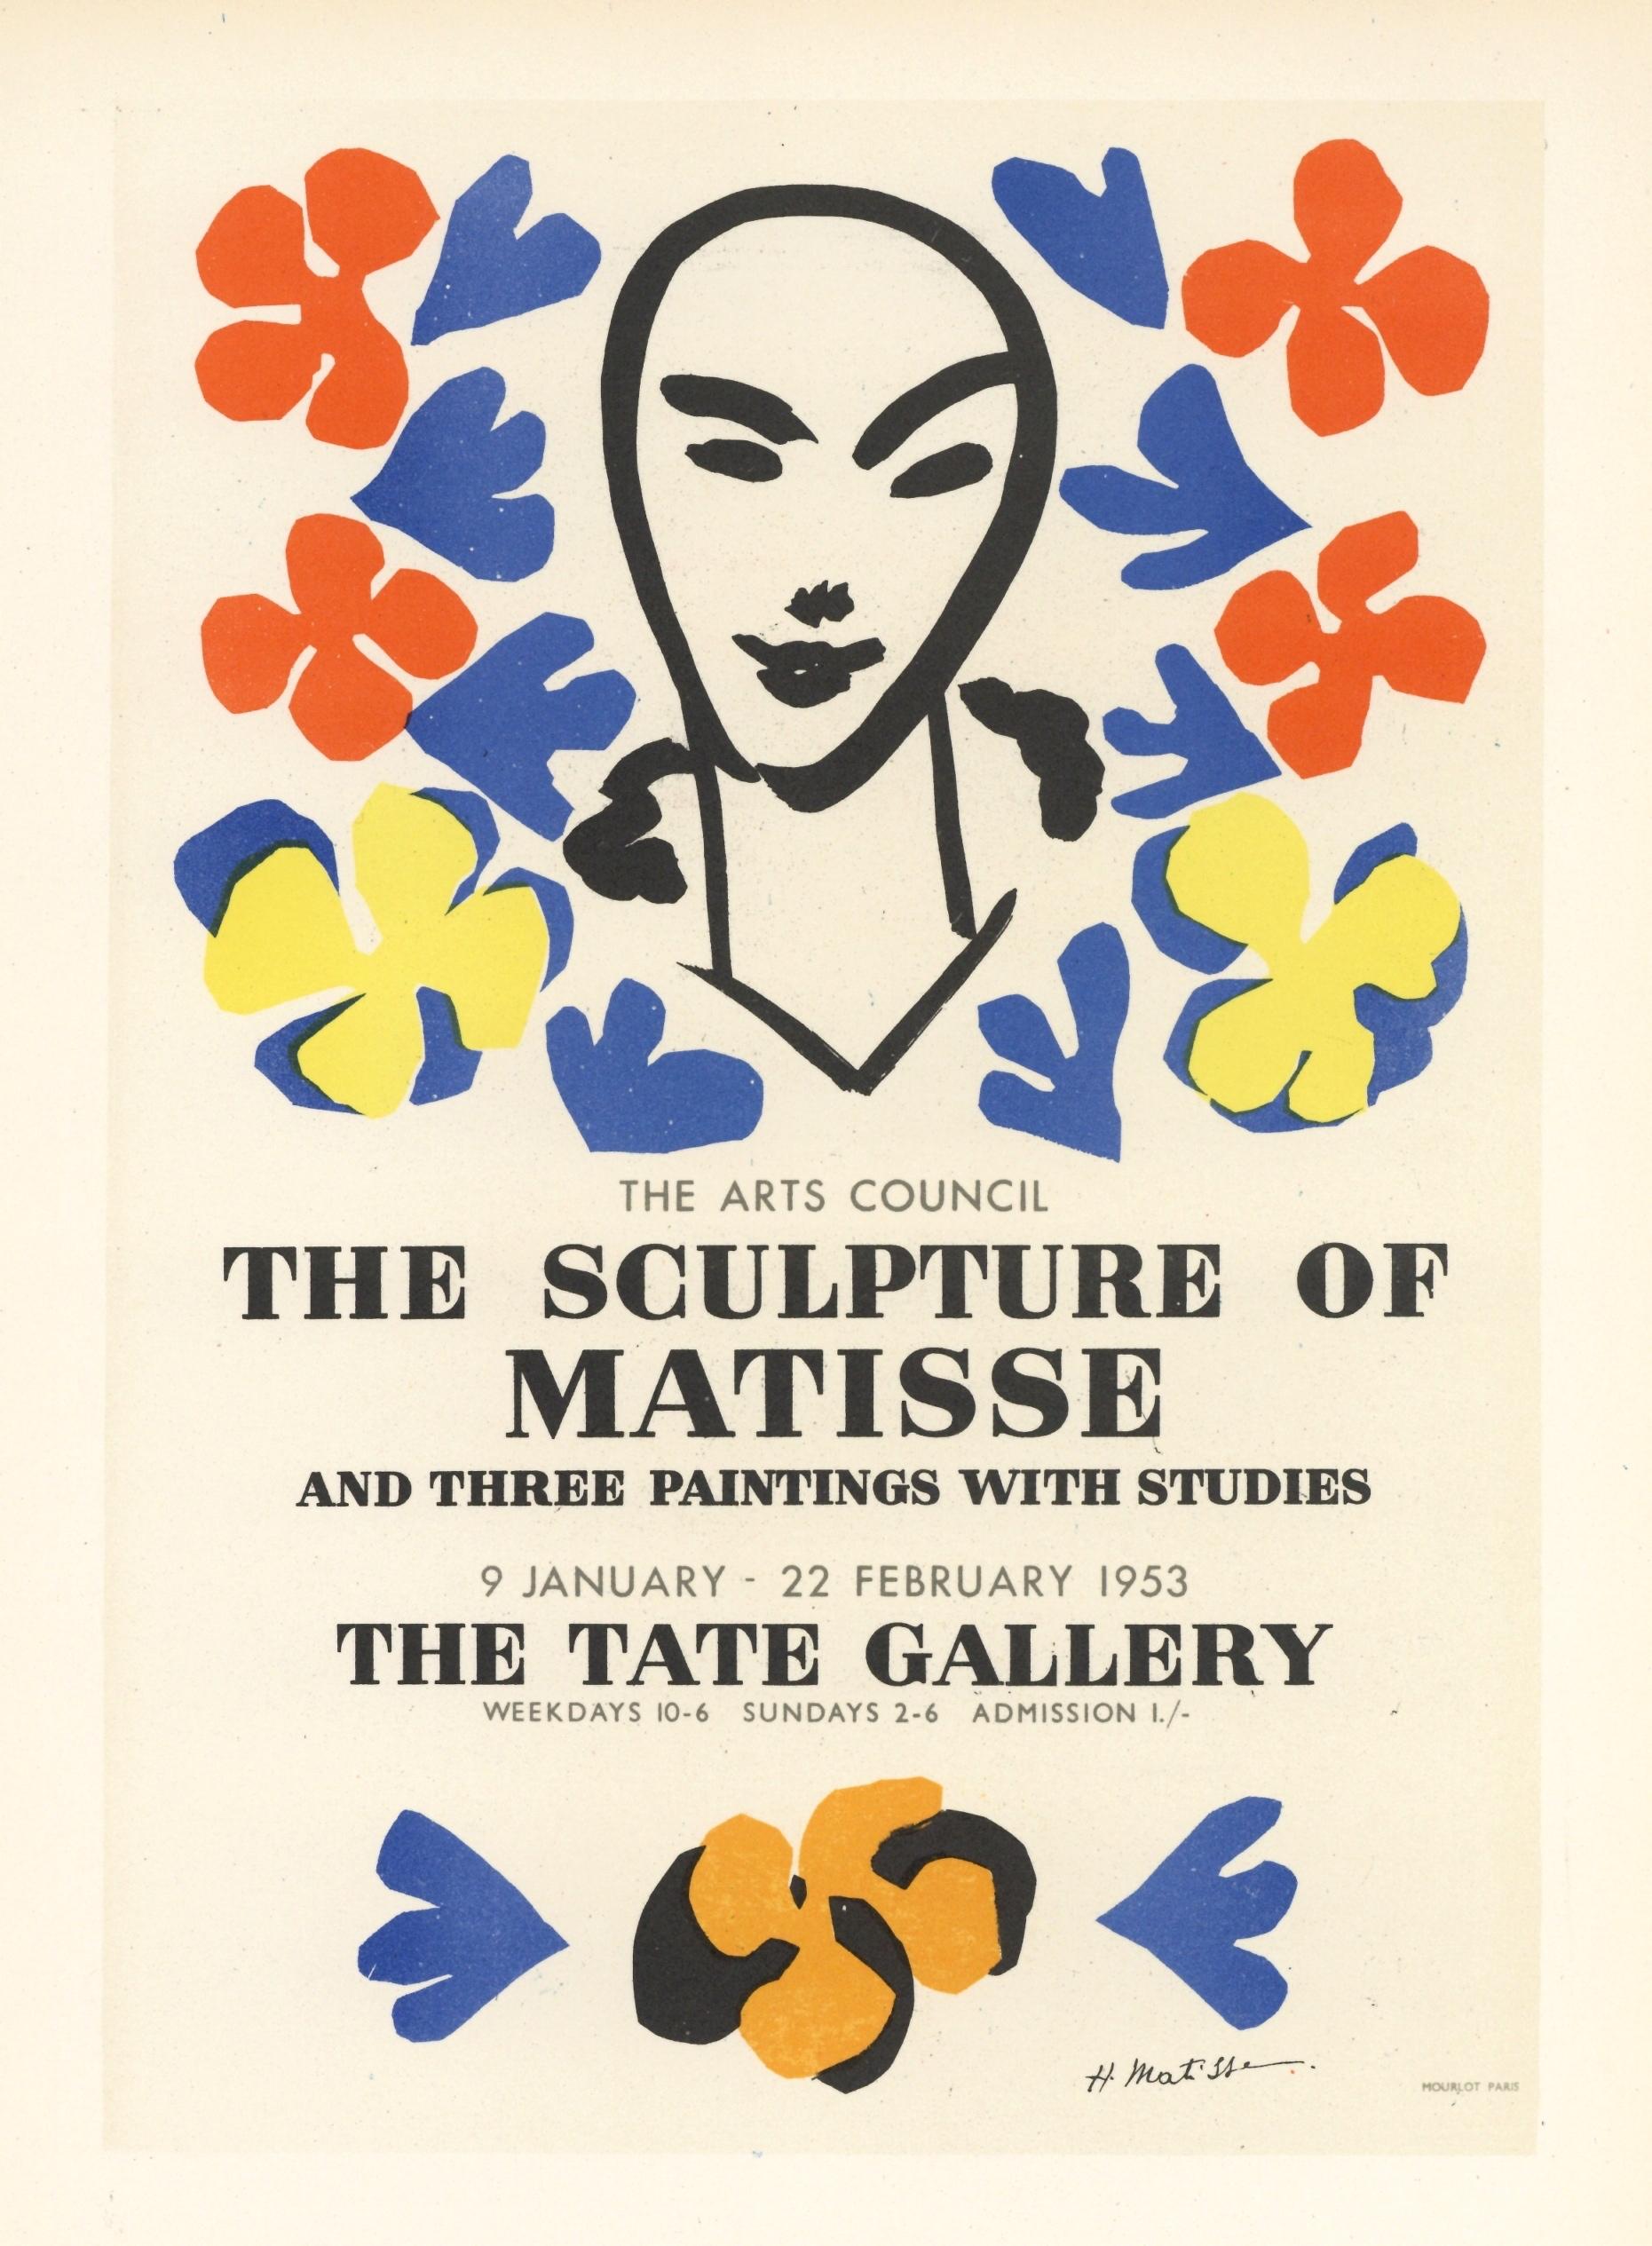 (after) Henri Matisse Portrait Print - "Sculpture of Matisse" lithograph poster